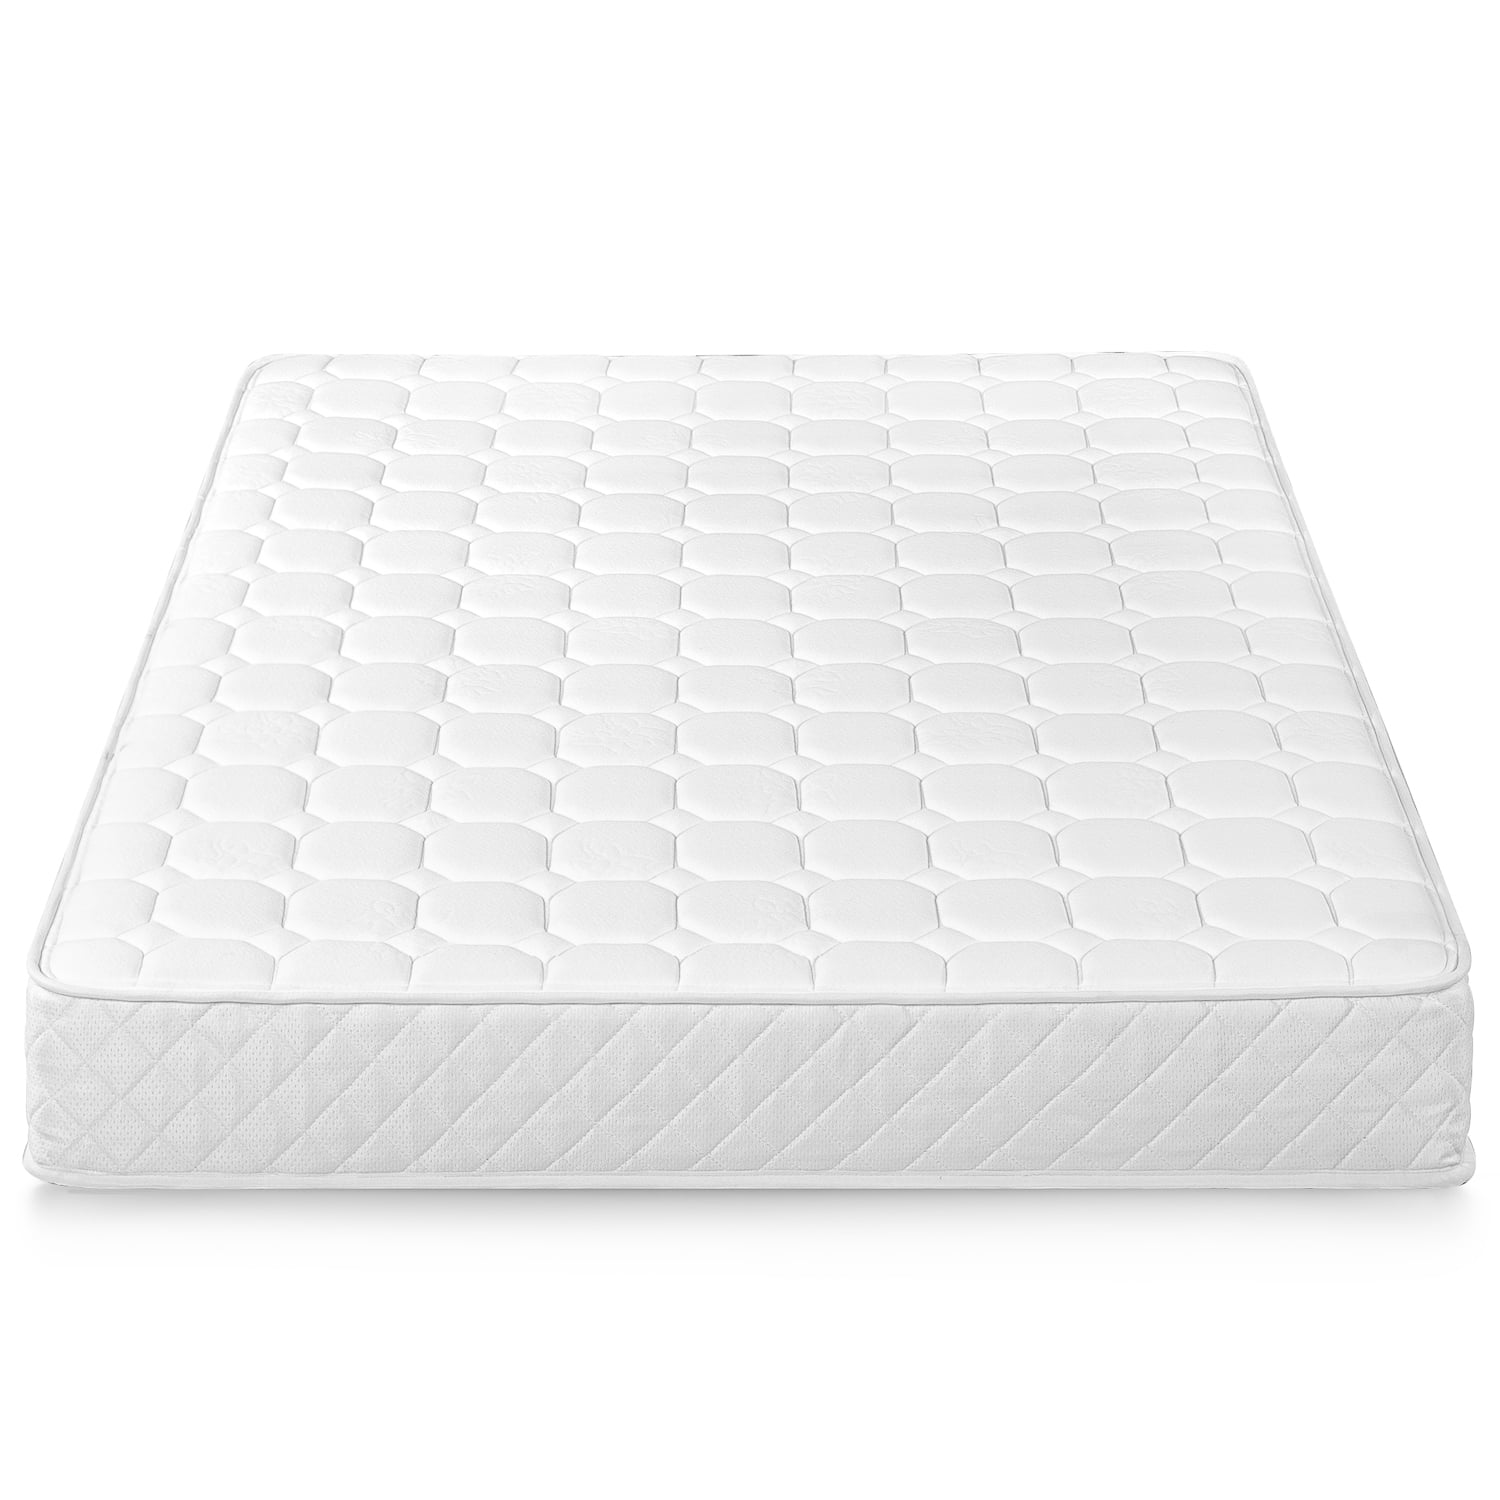 8-Inch Spring Mattress-In-a-Box Slumber 1 Bed Foam Comfort Sleep Twin Size White 